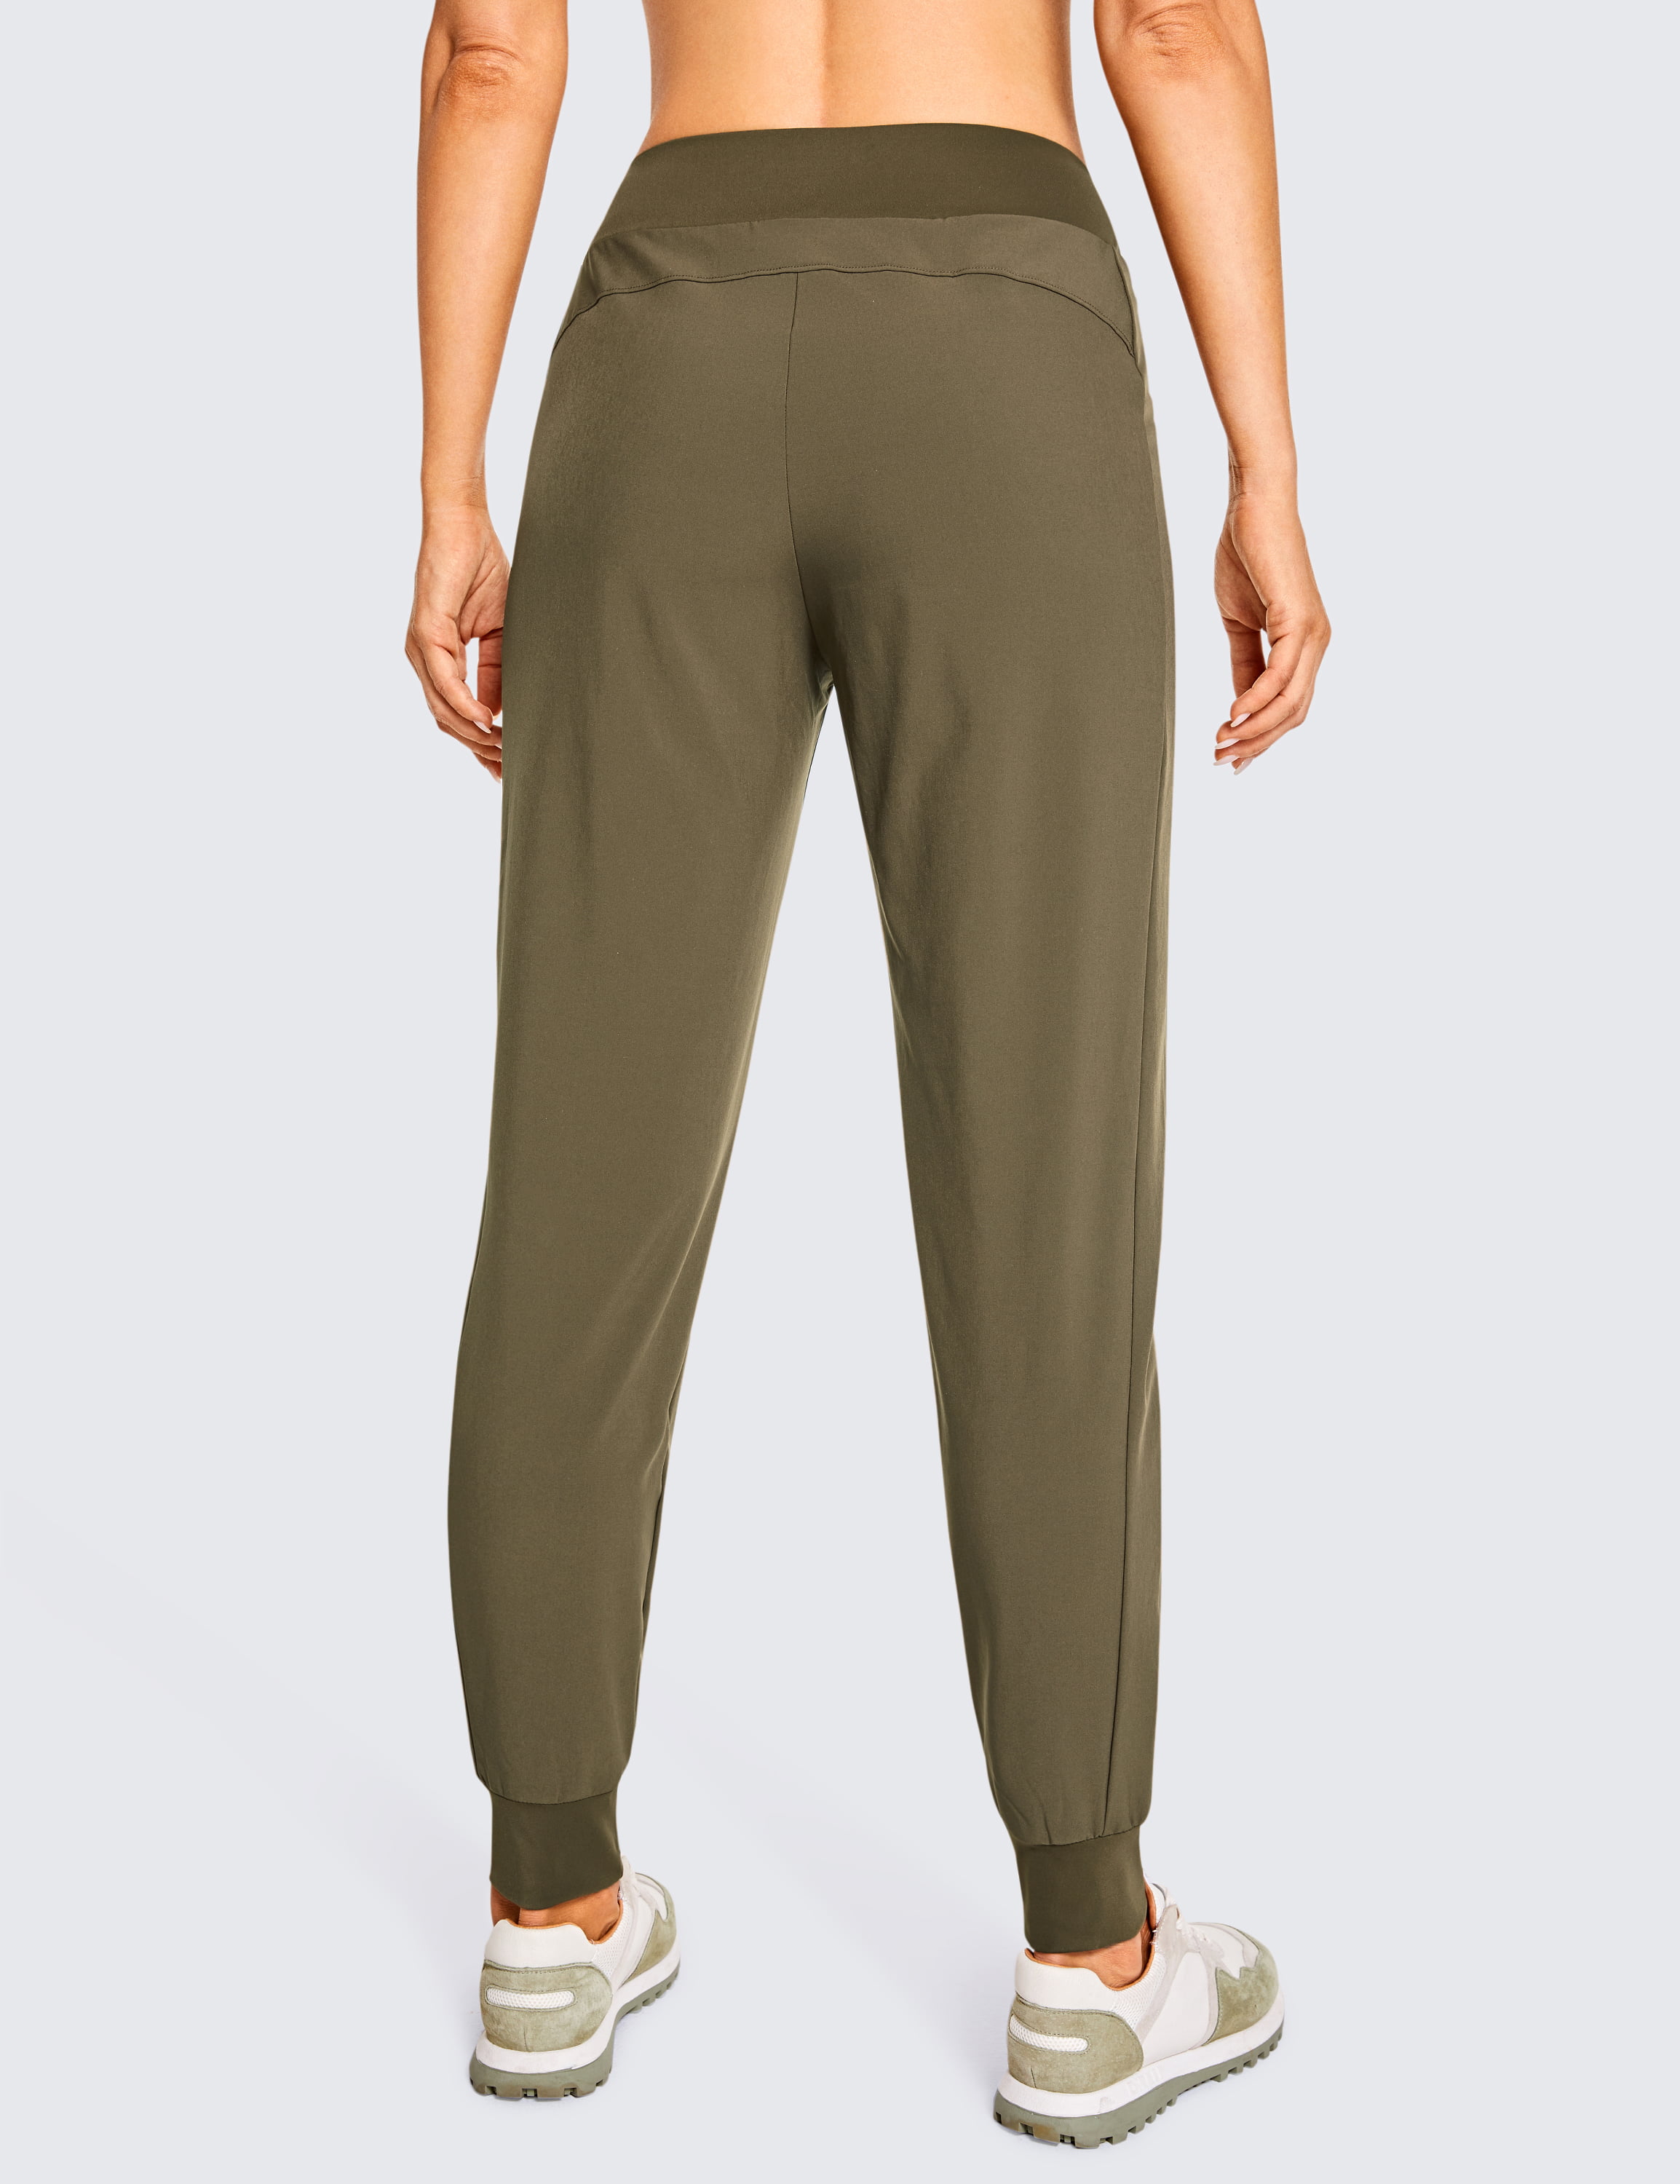 CRZ YOGA Women's Double Layer Athletic Joggers Sweatpants with Zipper  Pockets Comfy Lounge Workout Pants with Elastic Waist - Walmart.com